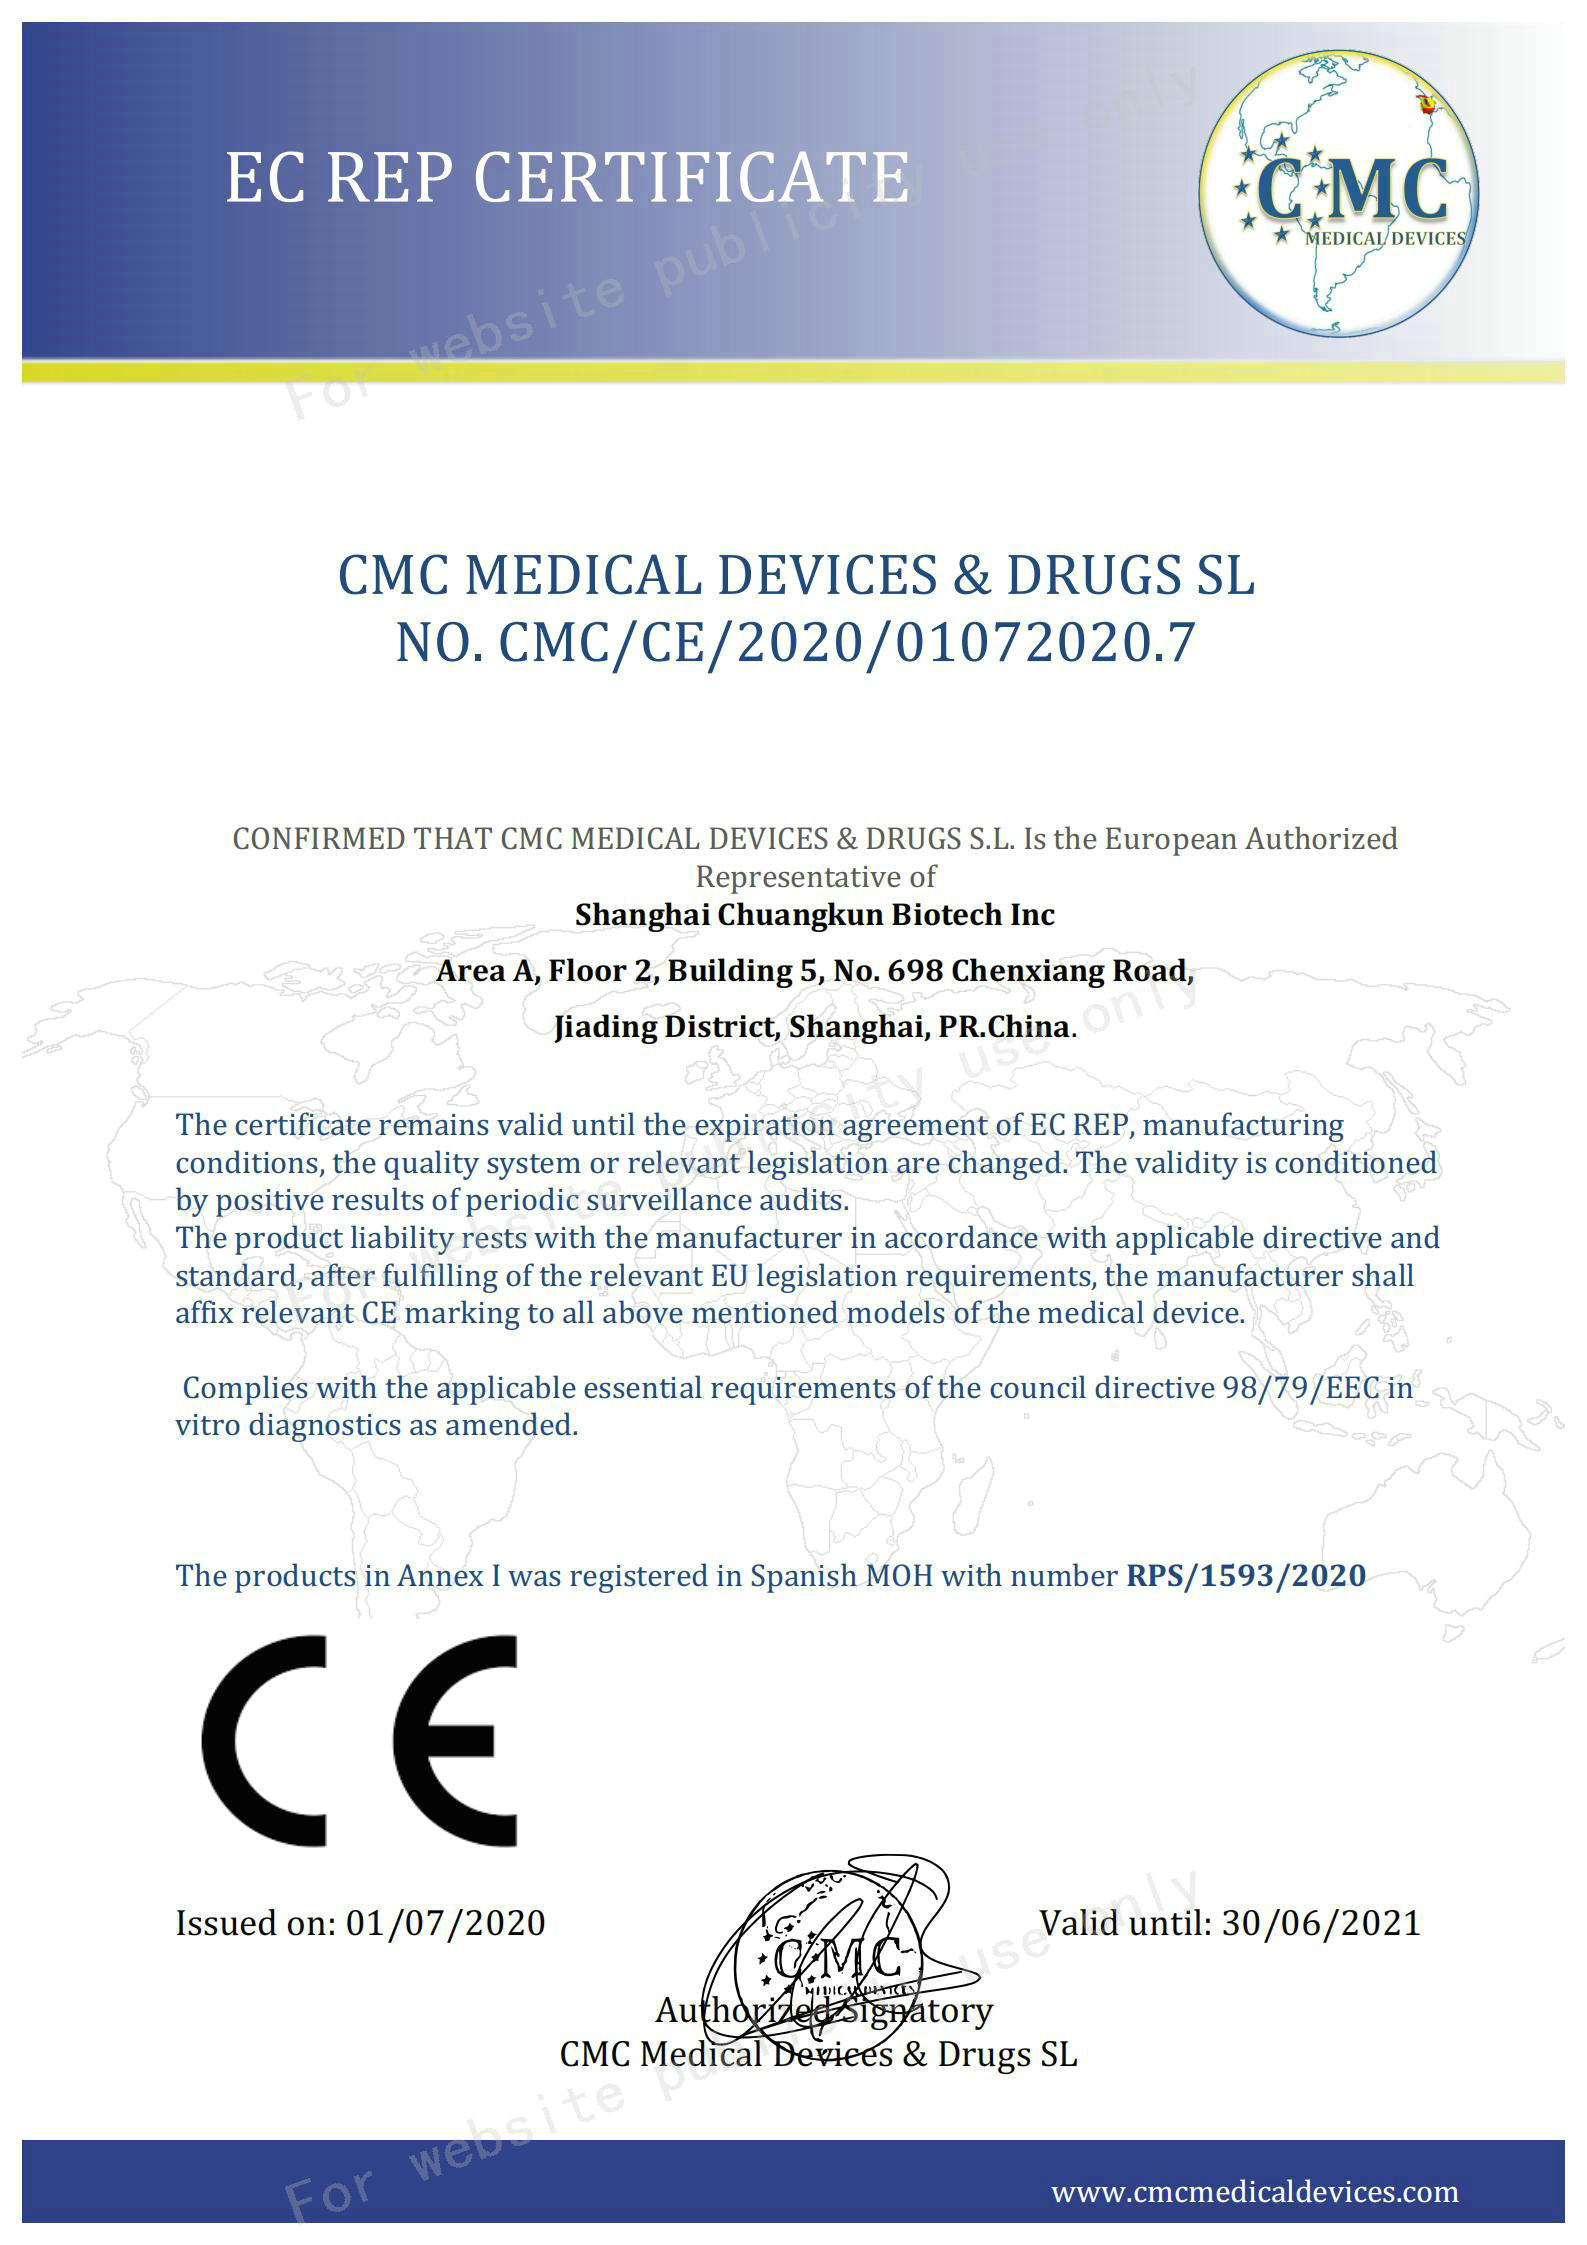 02 Certyfikat CE strona 1